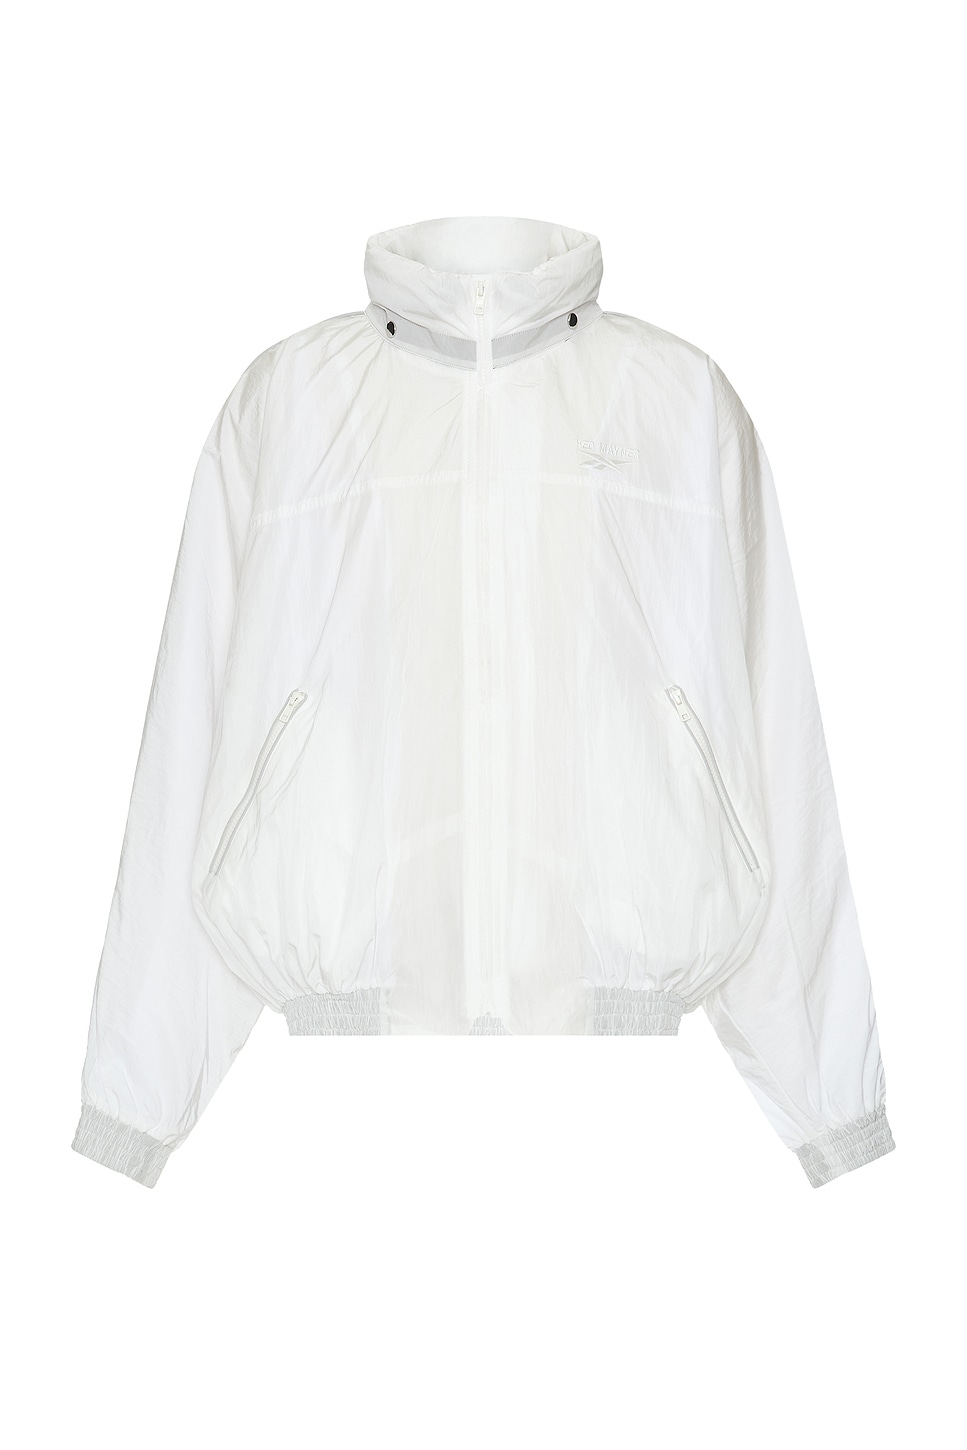 Reebok X Hed Mayner Hooded Jacket In White